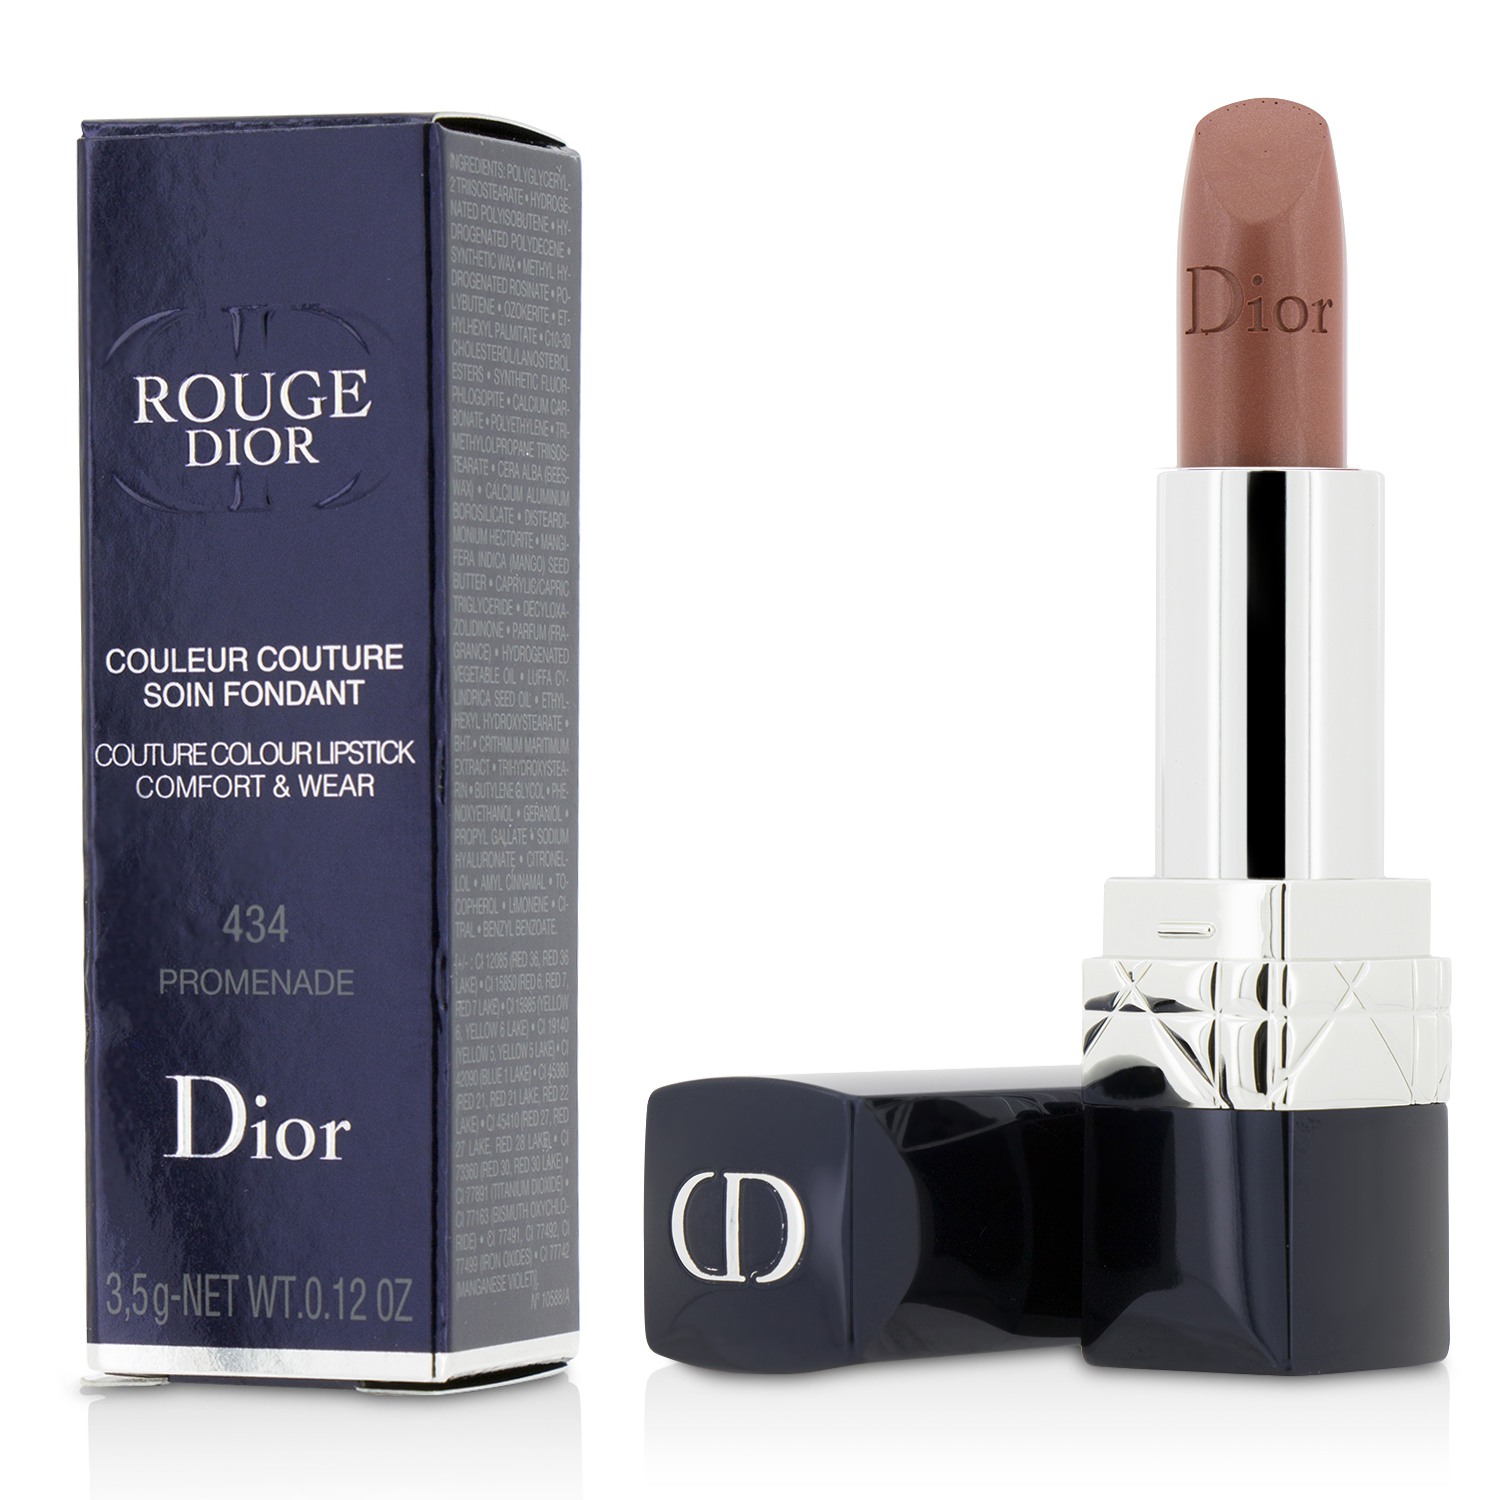 Rouge Dior Couture Colour Comfort & Wear Lipstick - # 434 Promenade Christian Dior Image